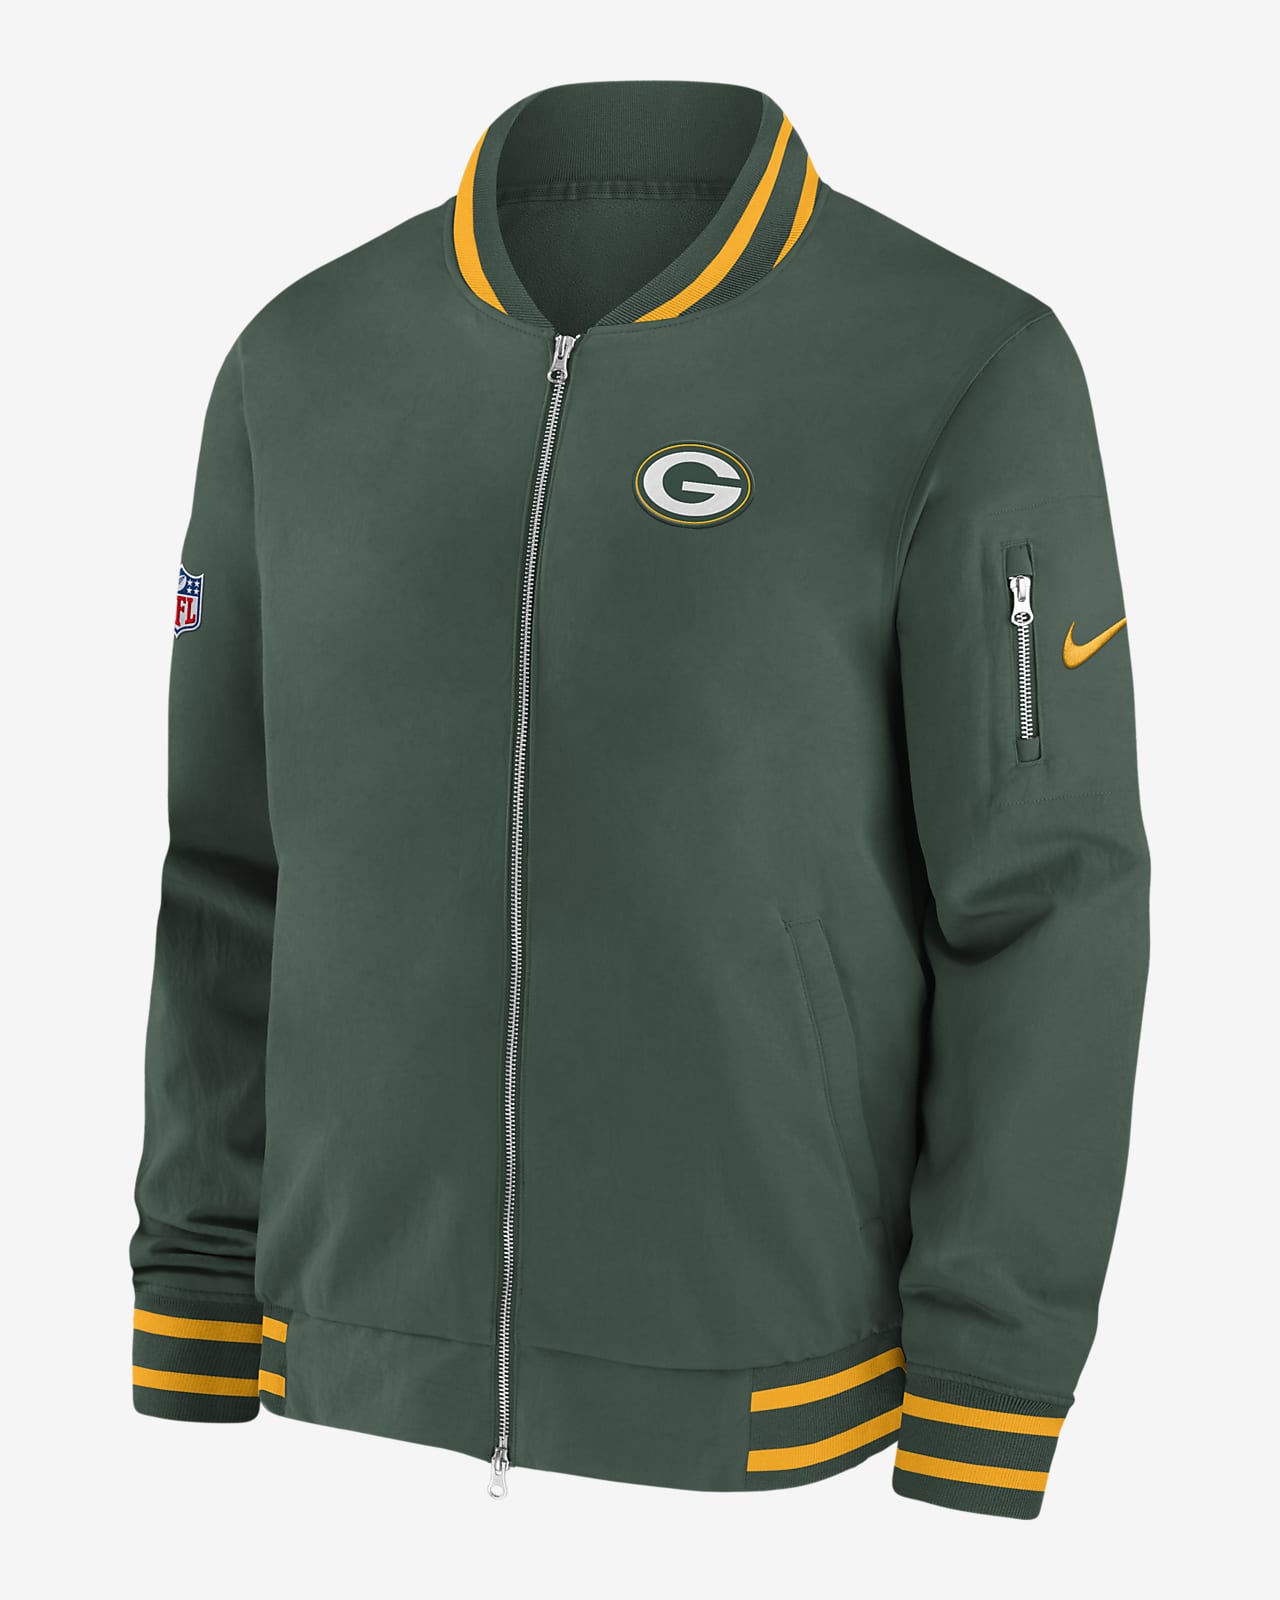 Nike Coach (NFL Green Bay Packers) Men's Full-Zip Bomber Jacket